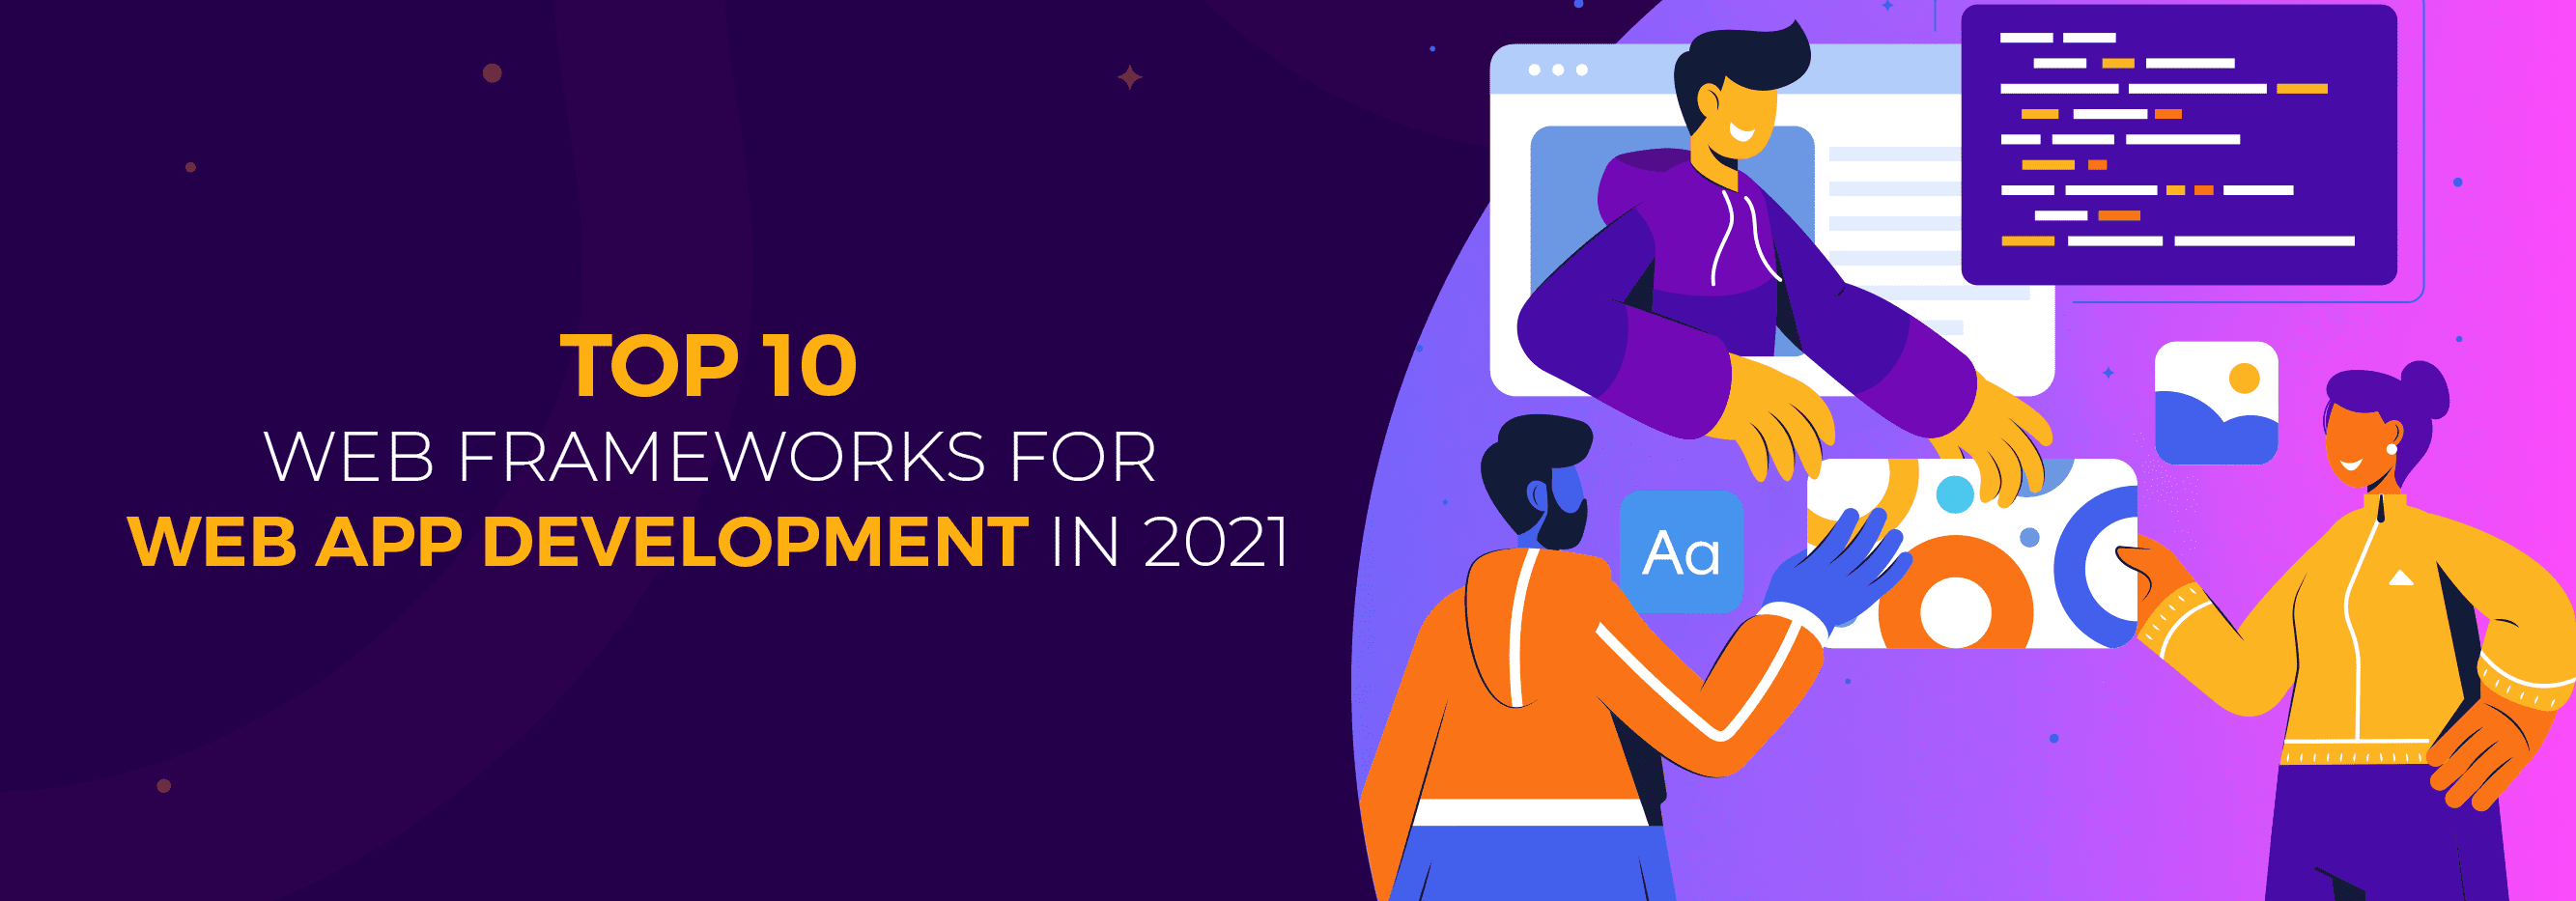 Top 10 Web Frameworks for Web App Development in 2021_banner